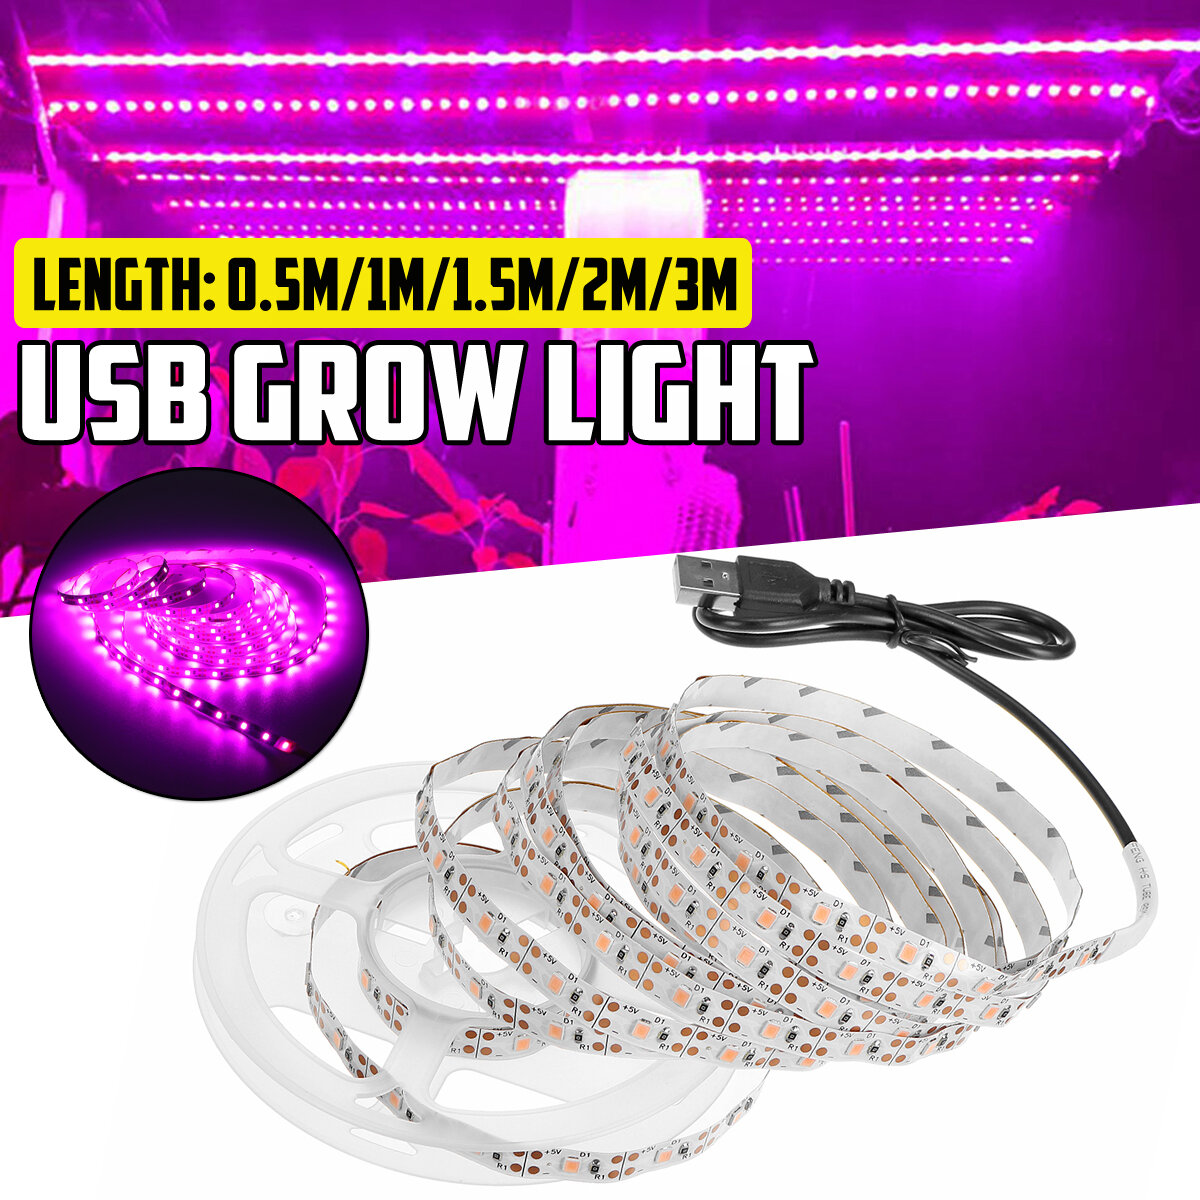 05M1M15M2M3M LED Grow Strip Light Full Spectrum USB Flower Seeds Plant Hydroponic Indoor Lamp 5V